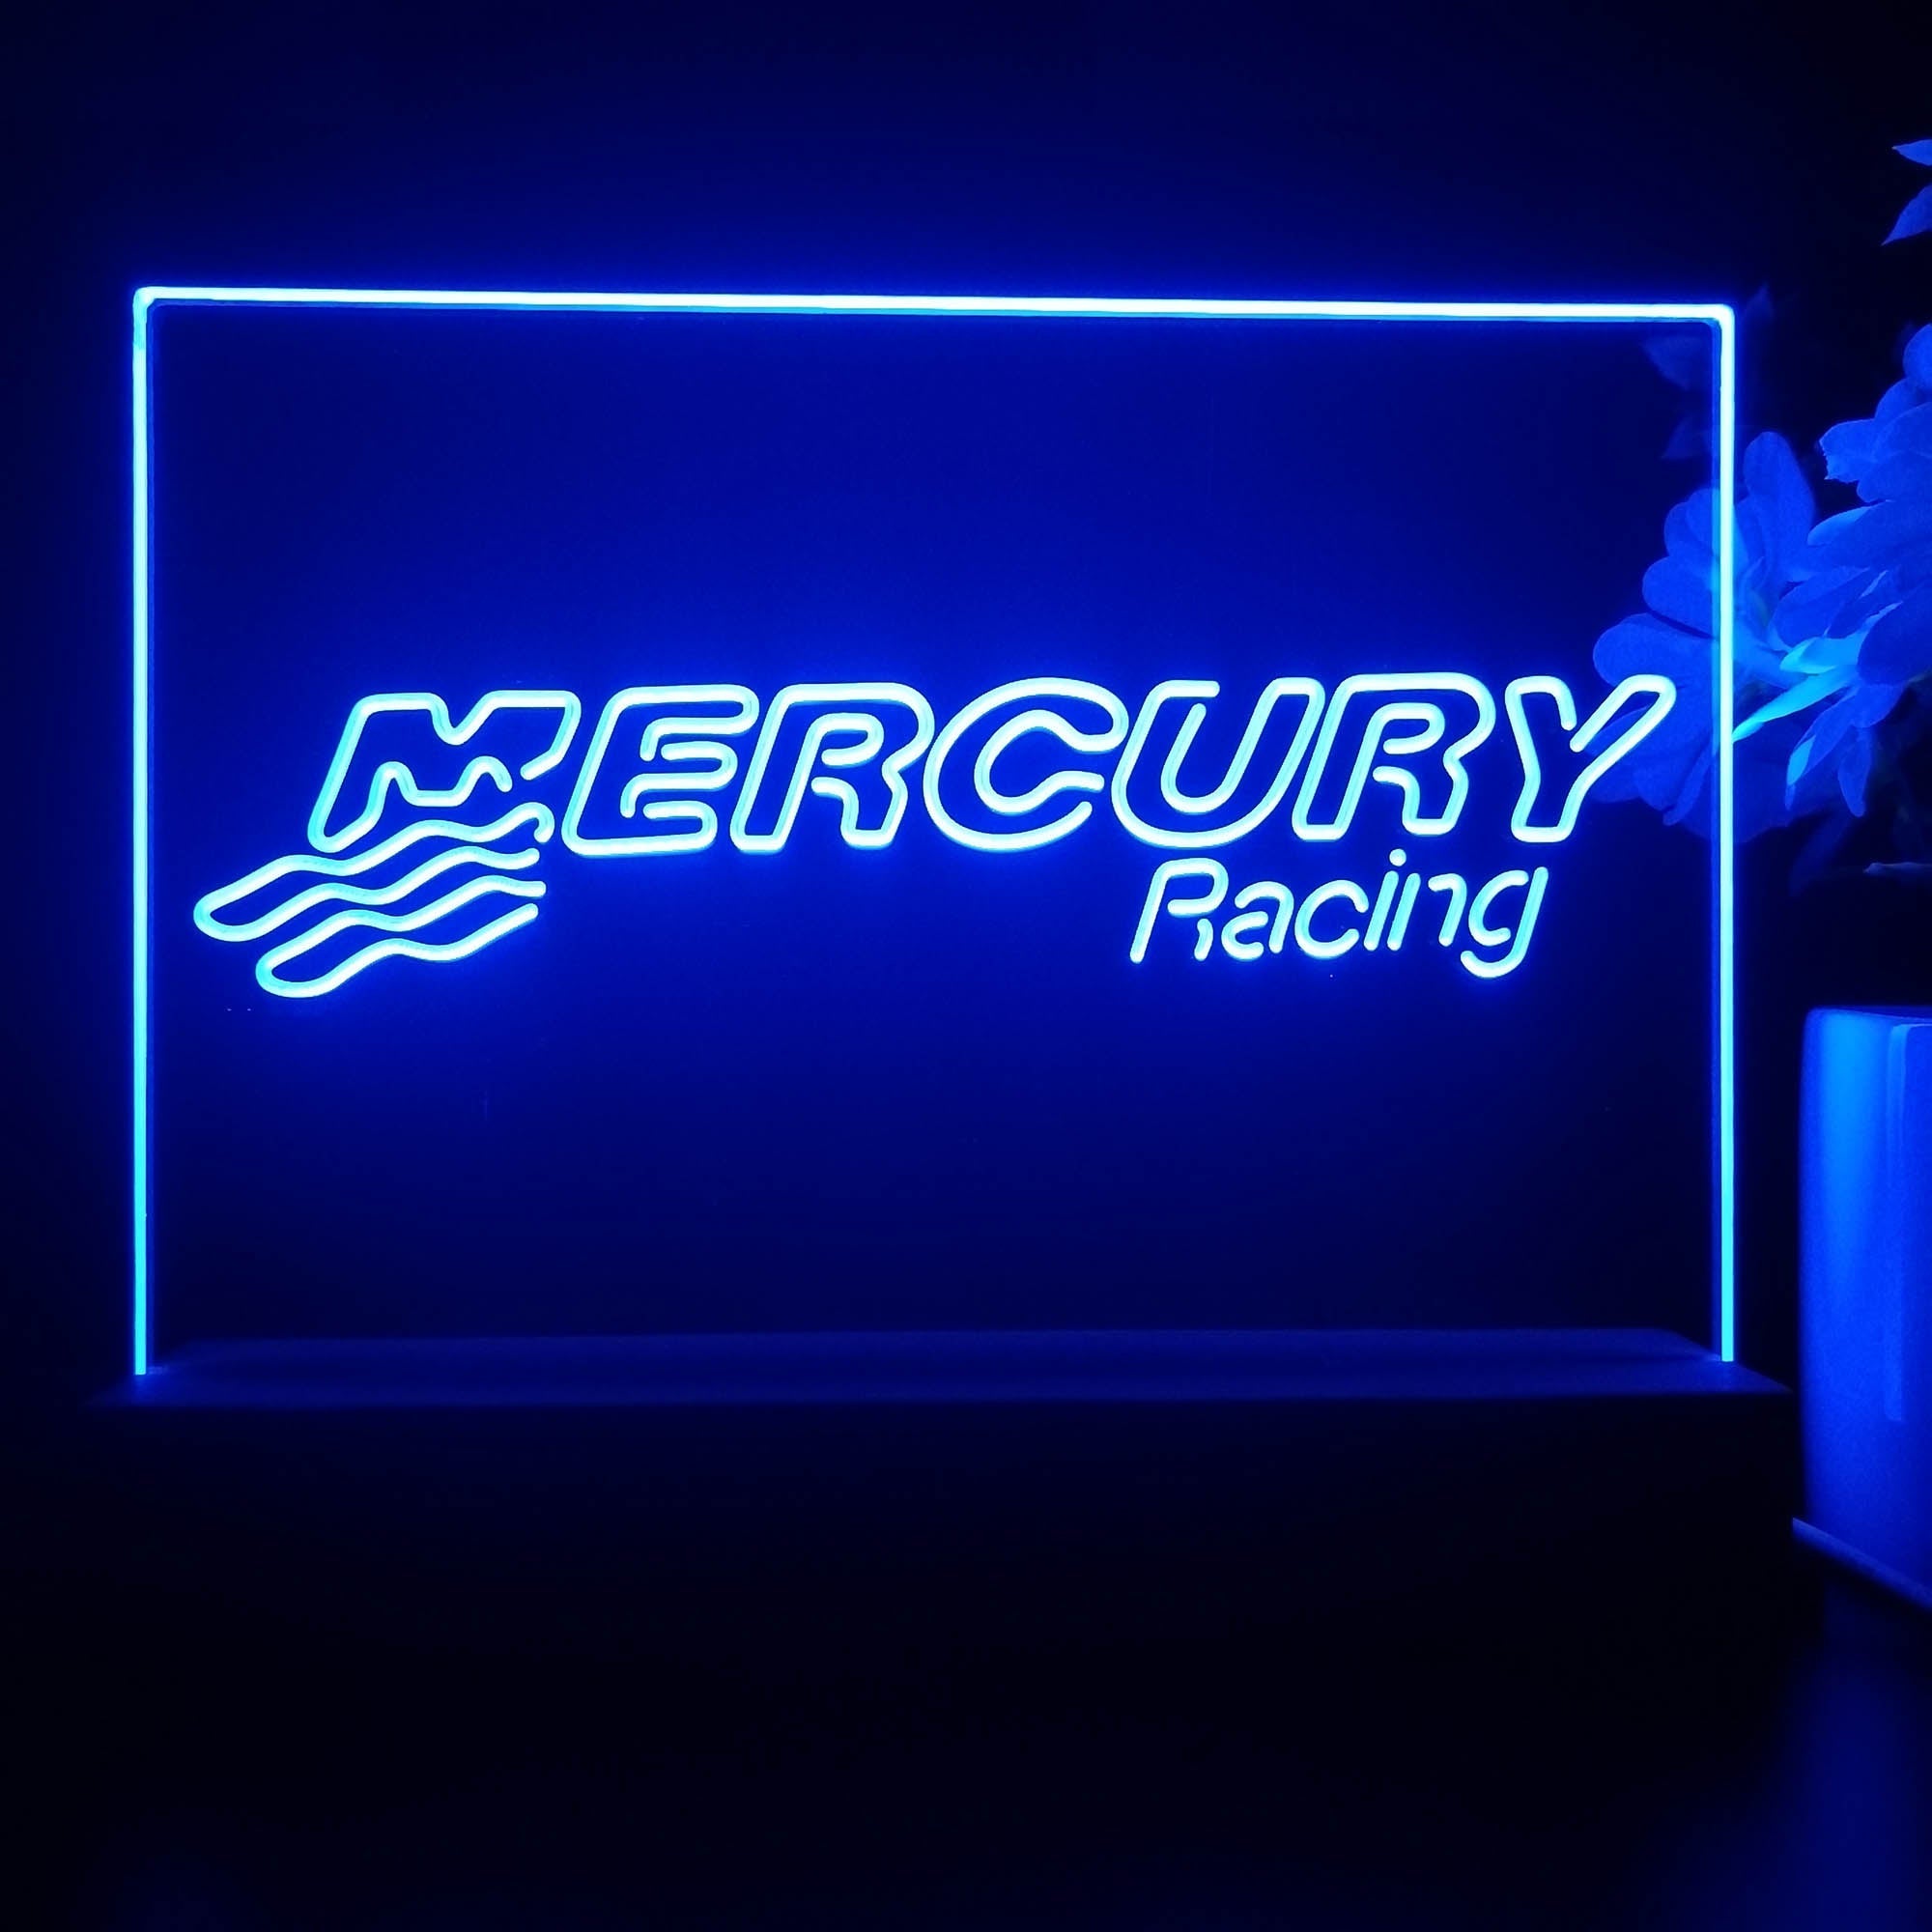 Mercury Racing 3D Illusion Night Light Desk Lamp